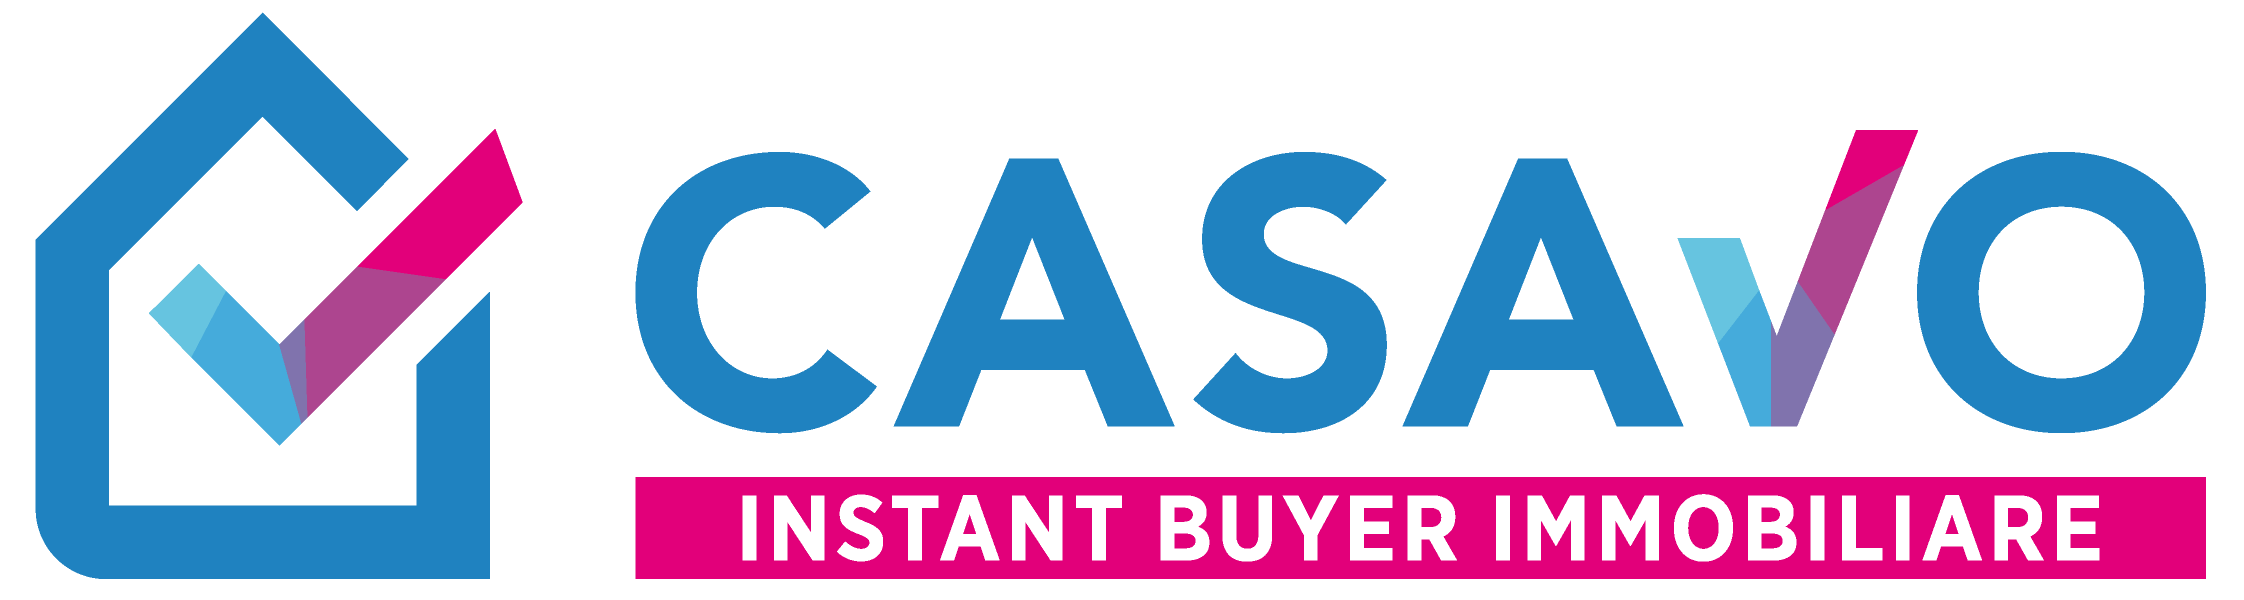 CASAVO - CLASSICO - POS logo CASAPRO20